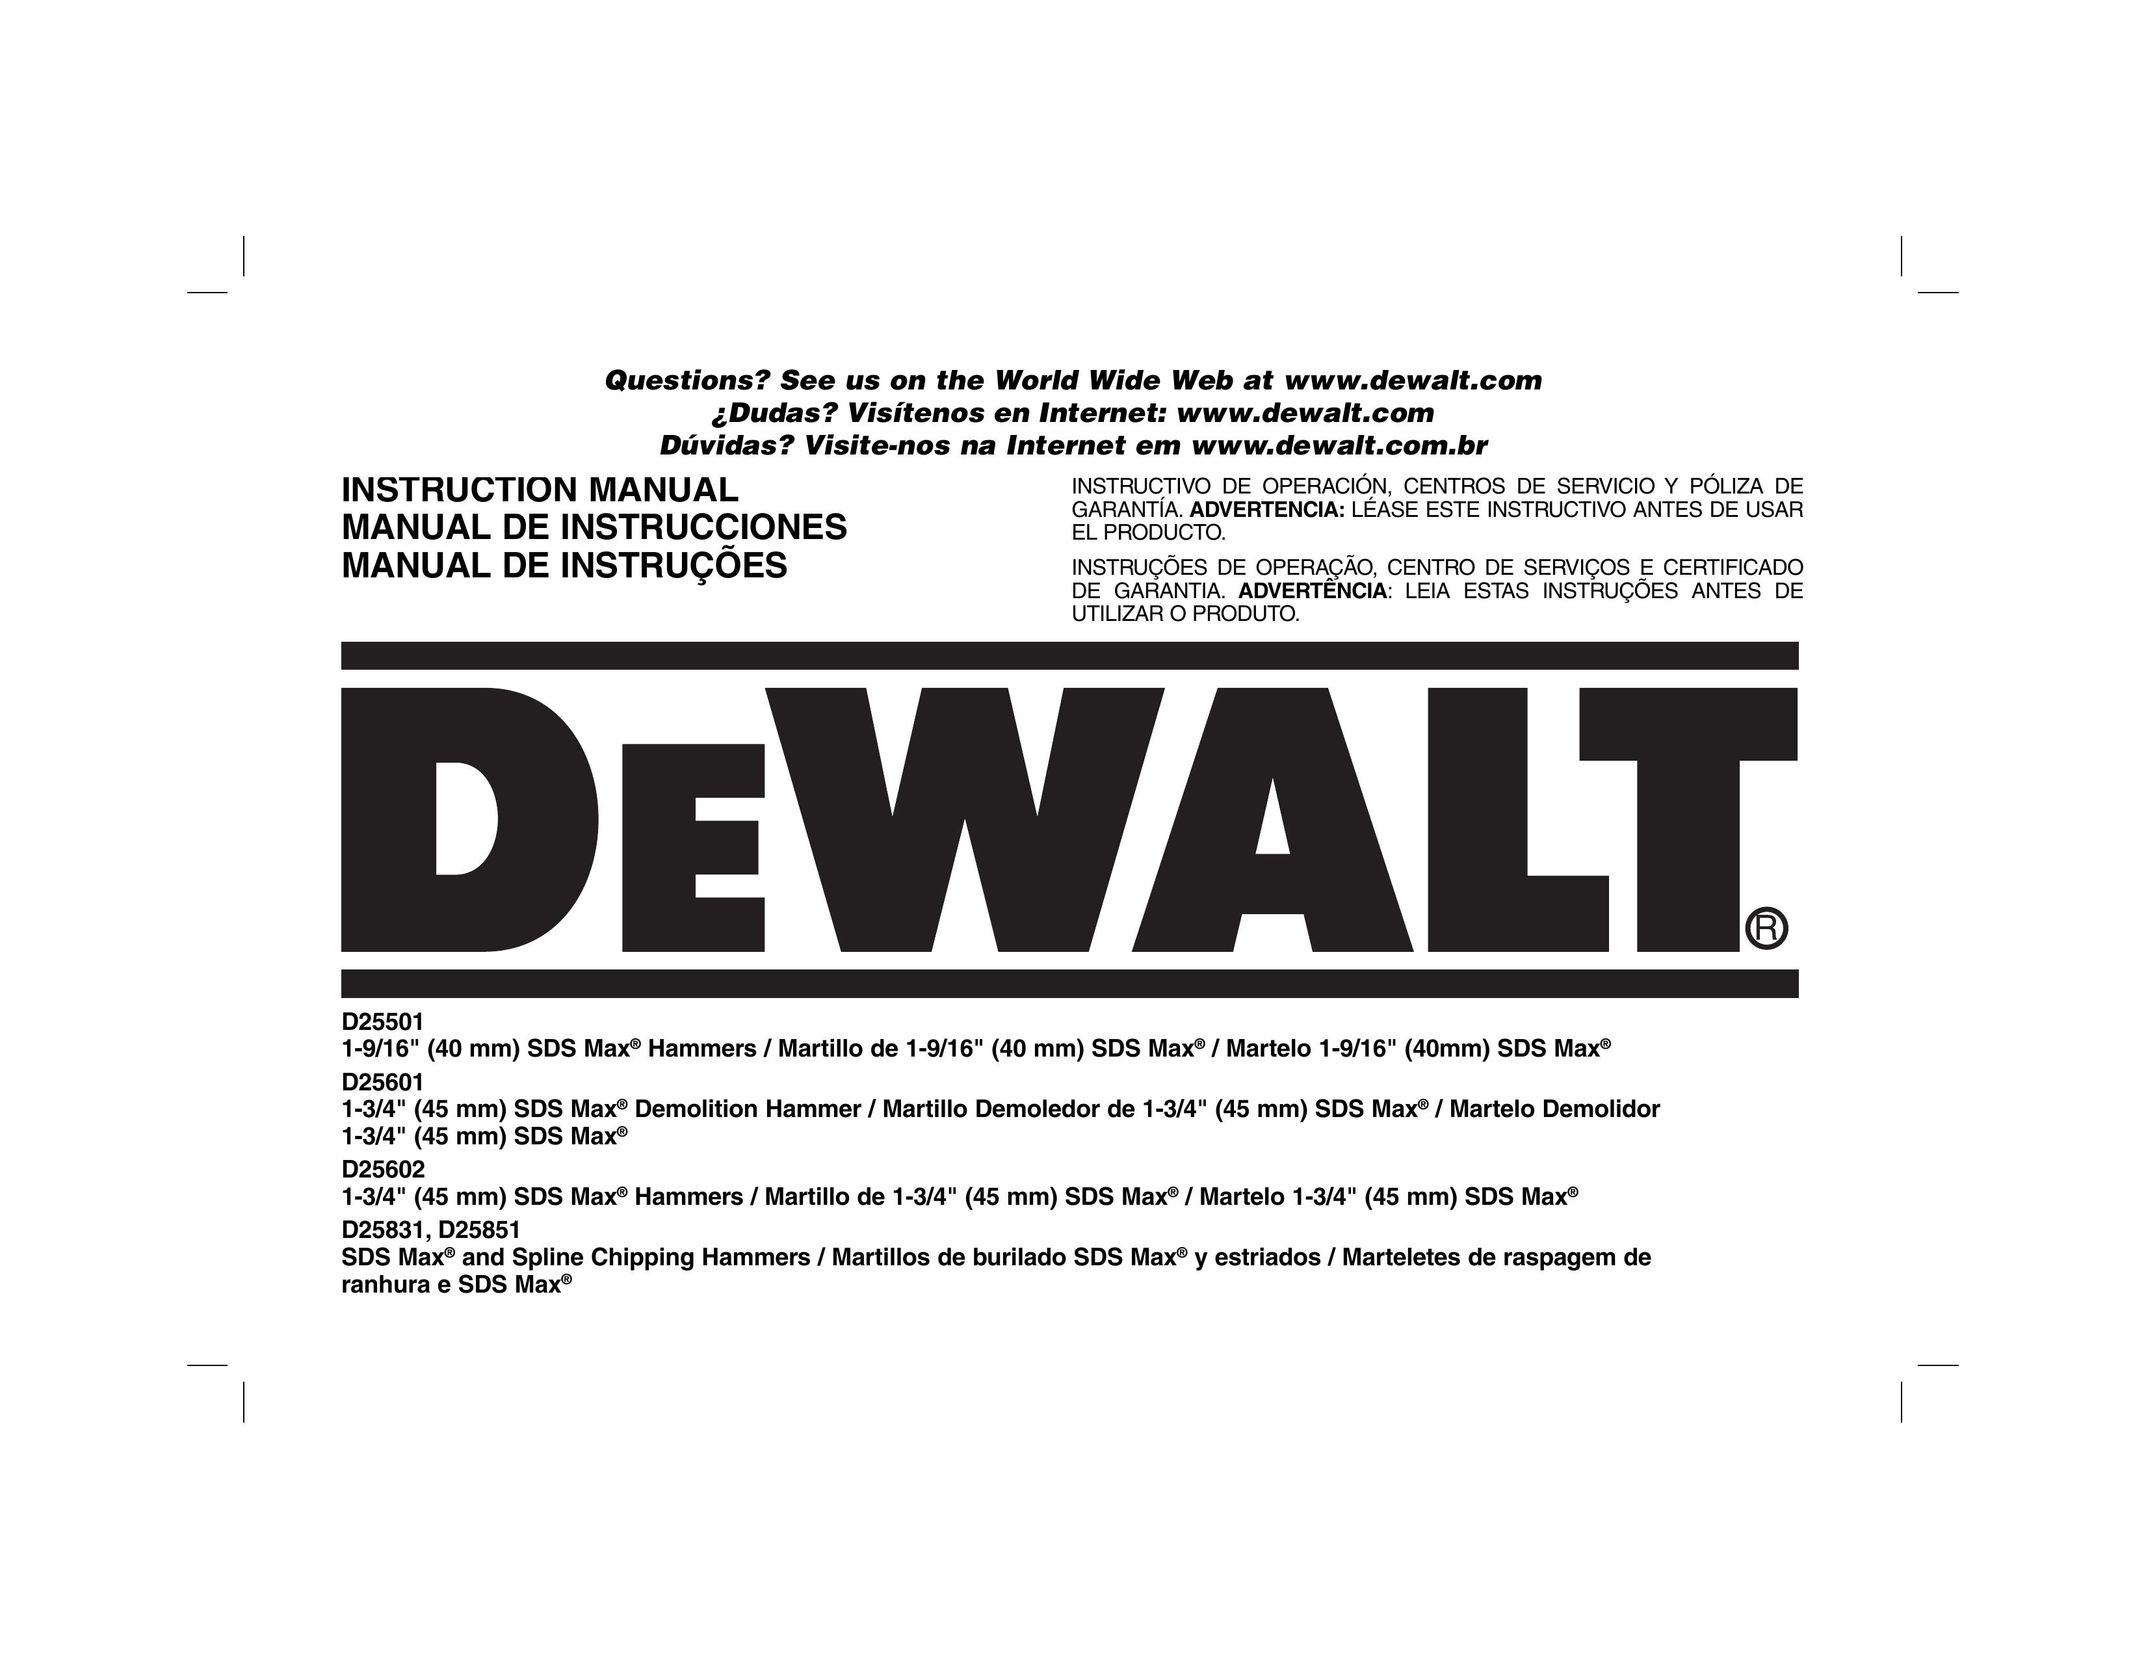 DeWalt D25501 Power Hammer User Manual